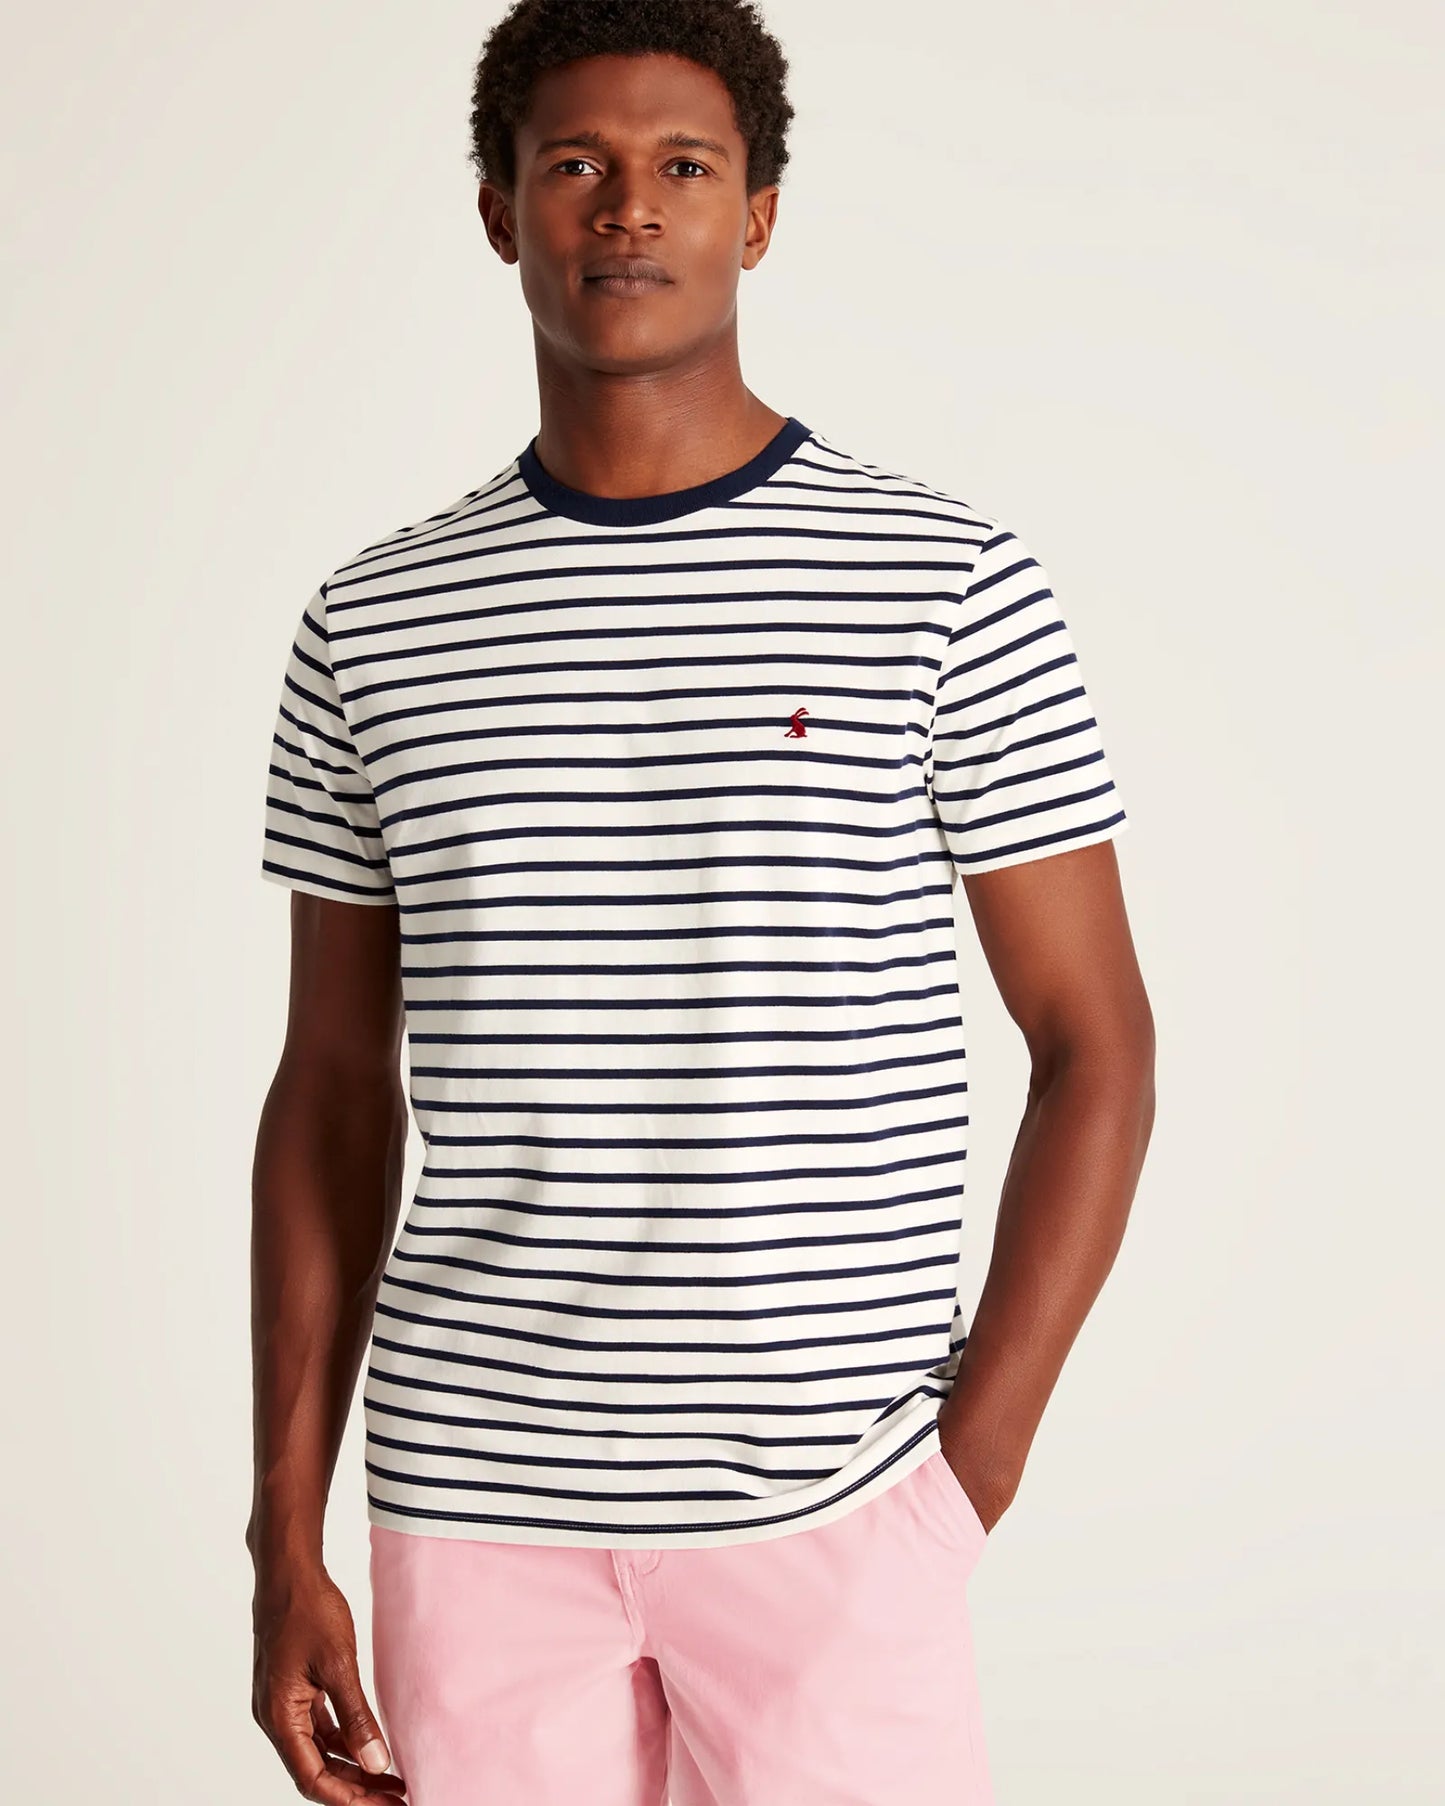 Boathouse Stripe T-Shirt - Cream Navy Stripe